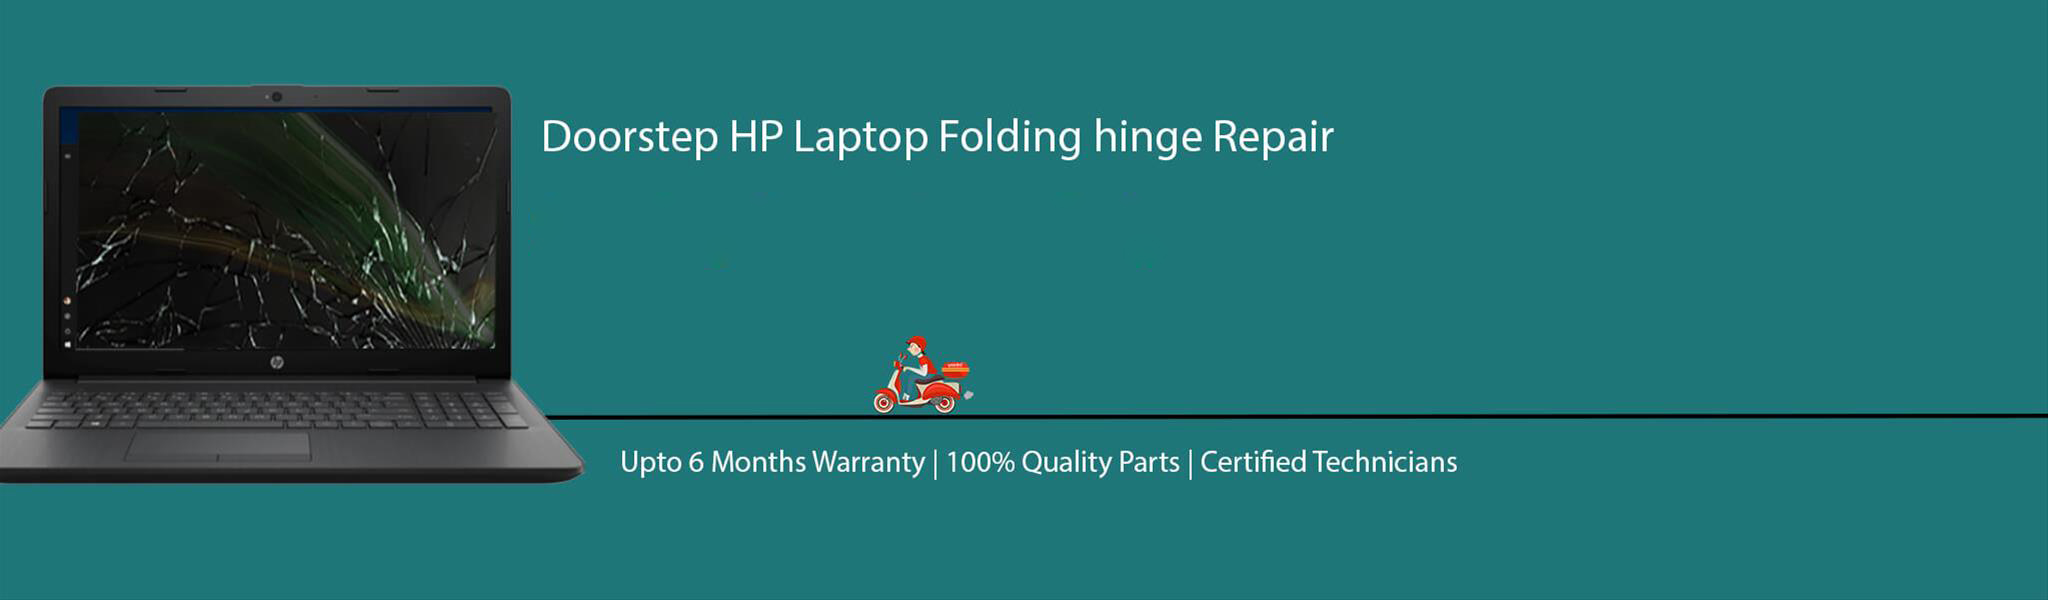 hp-laptop-folding-hinge-repair.jpg